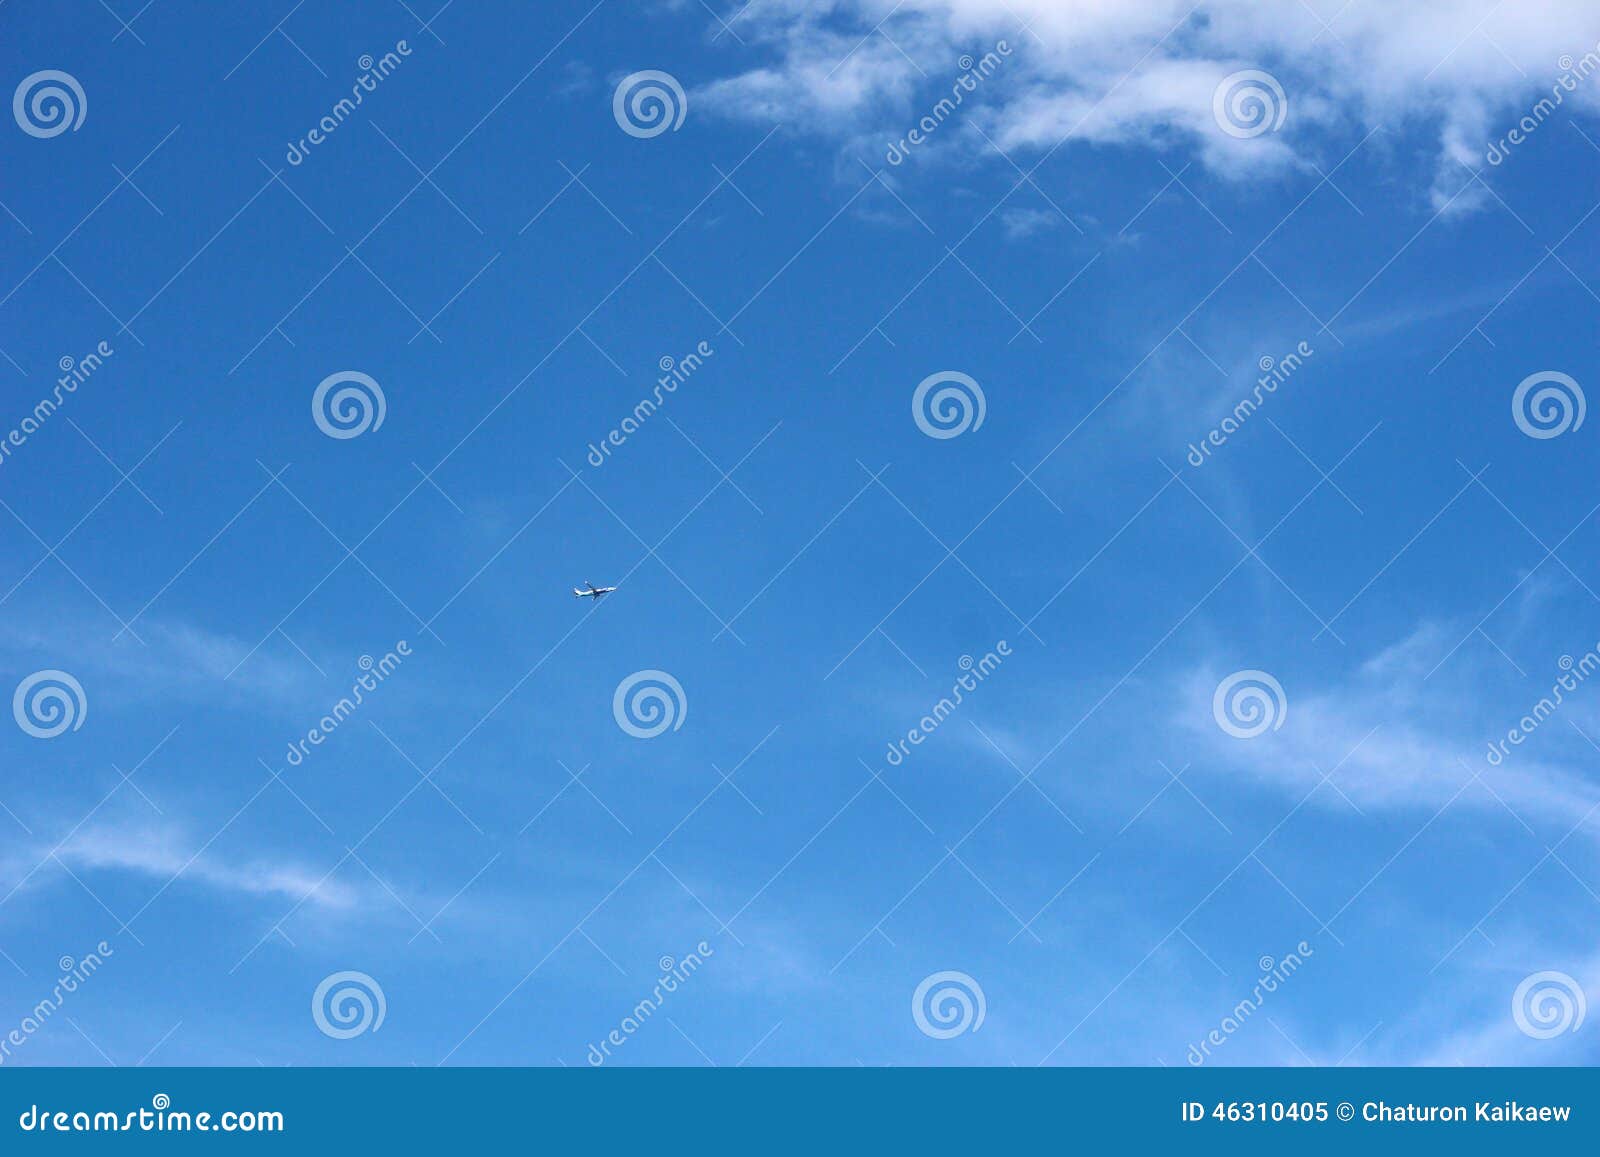 plane on clear blue sky